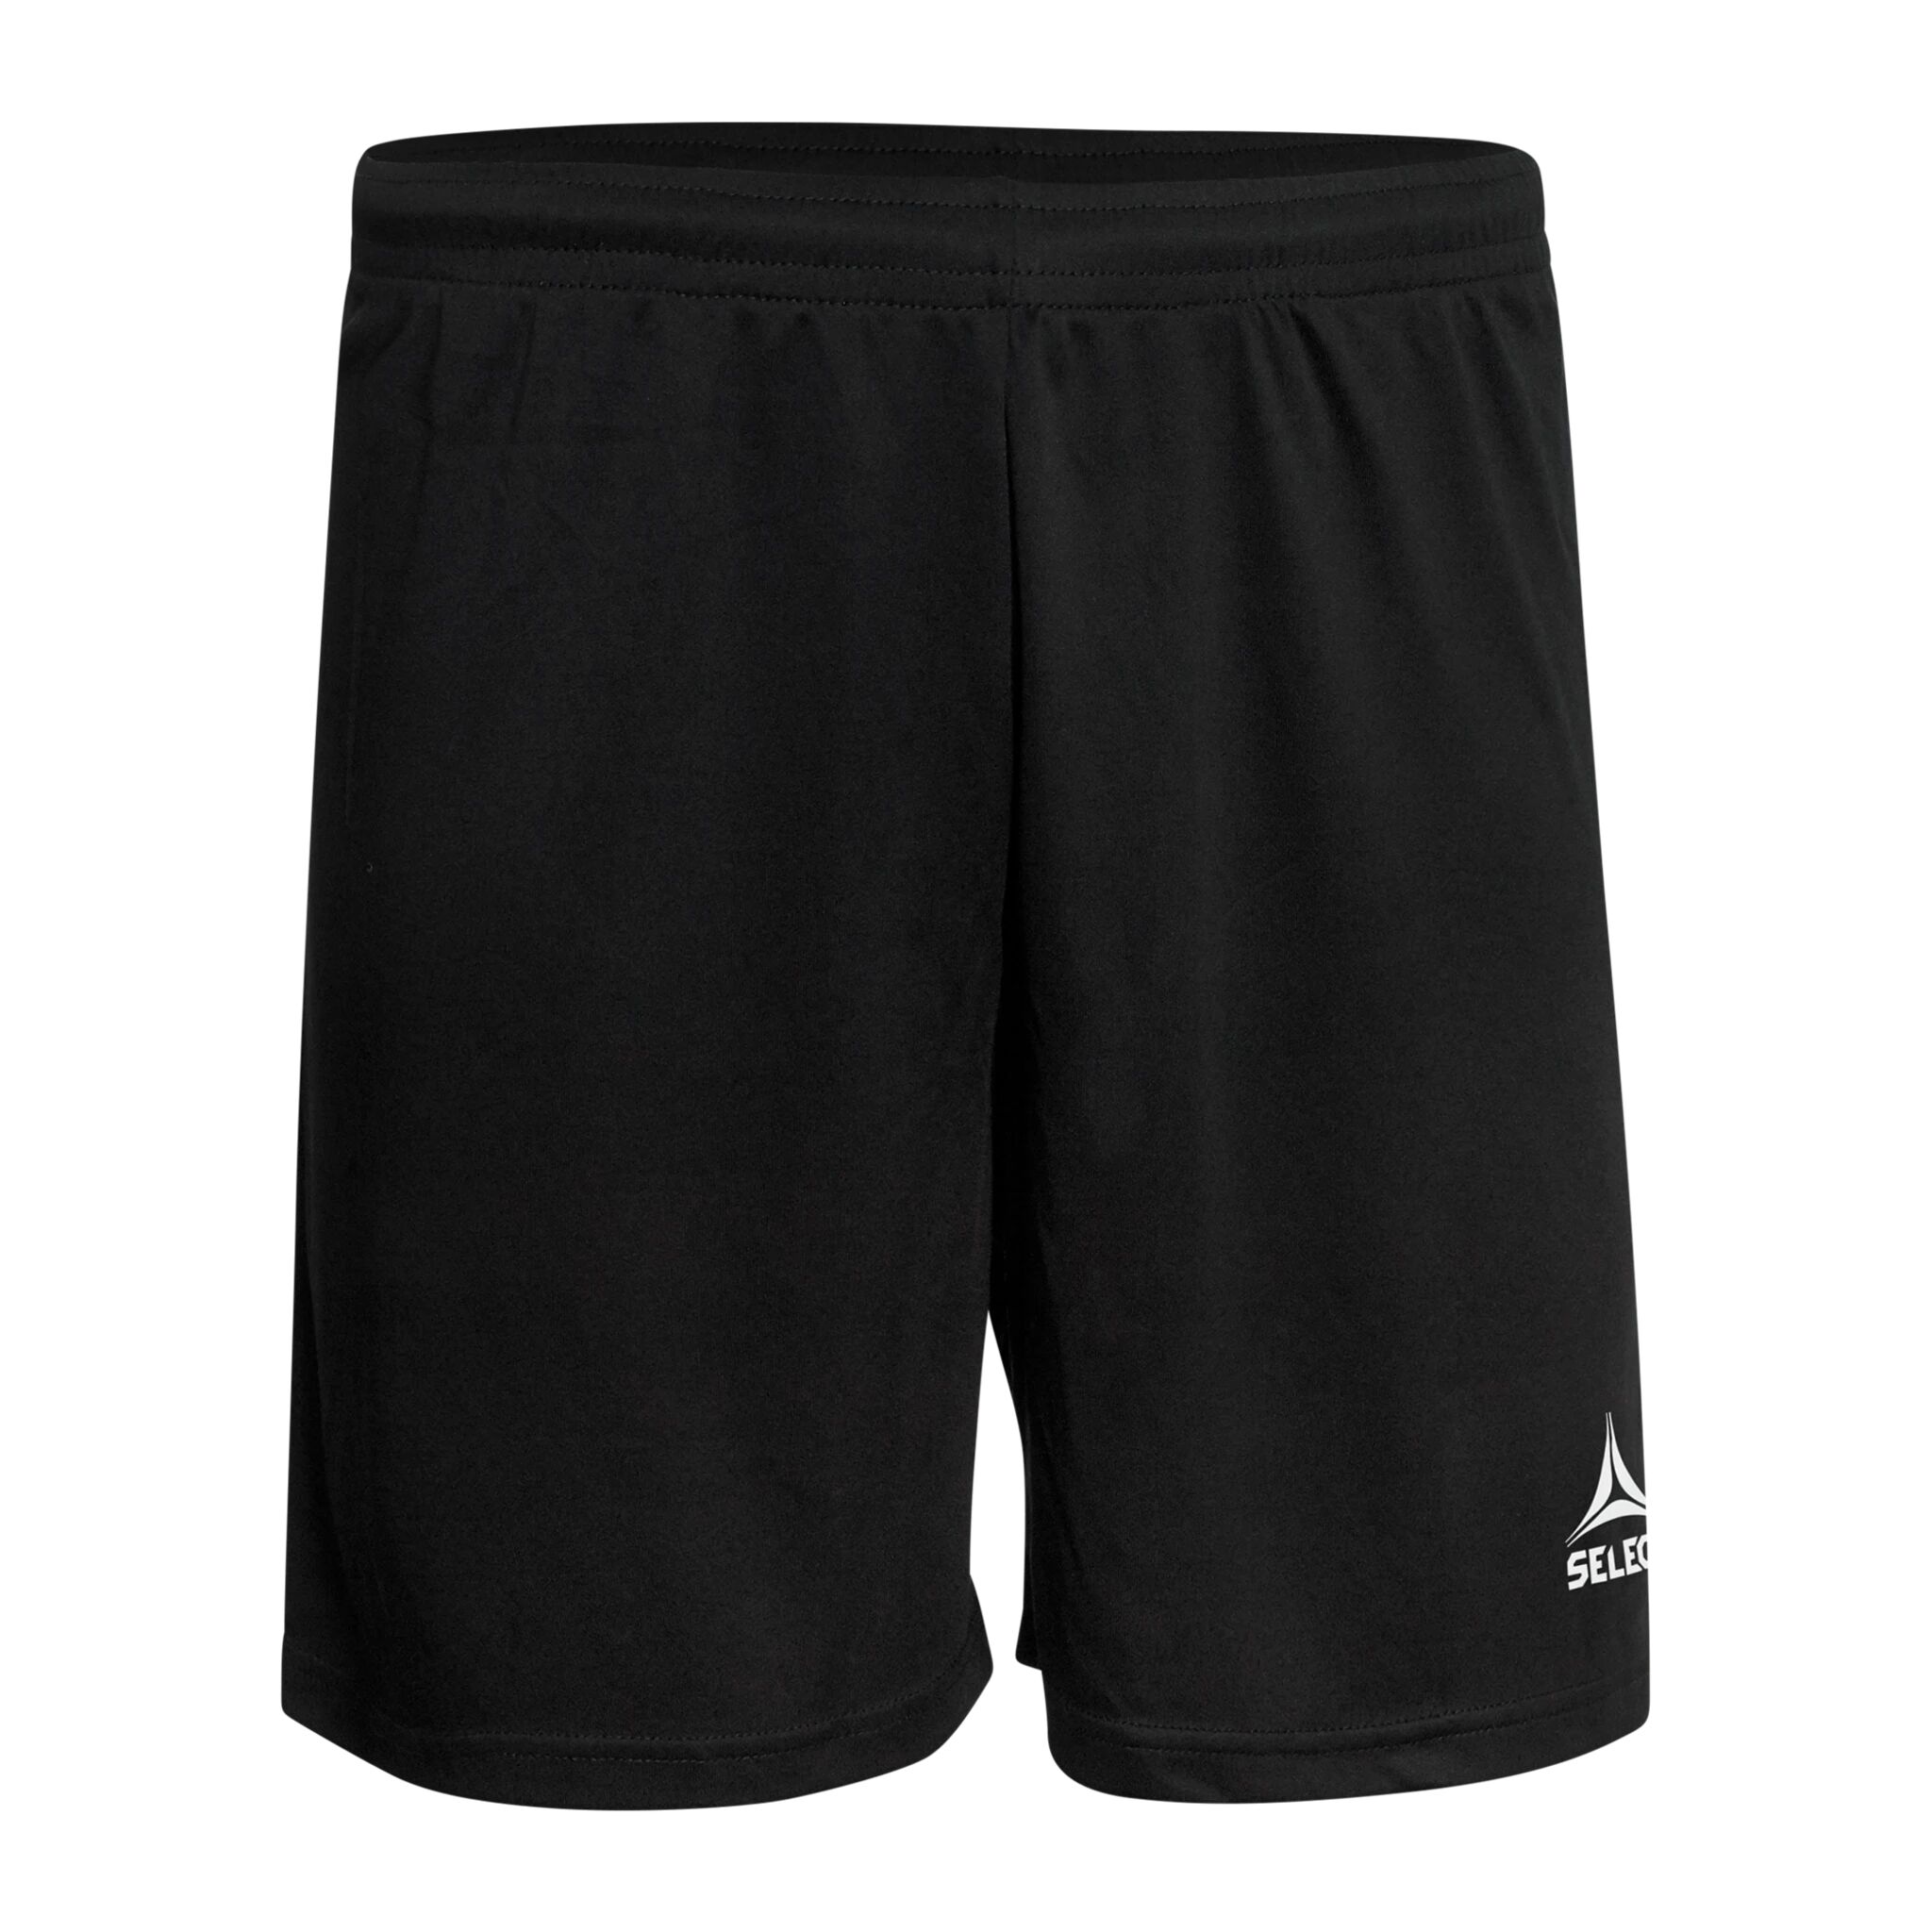 Select Player shorts Pisa, shorts senior 152 BLACK